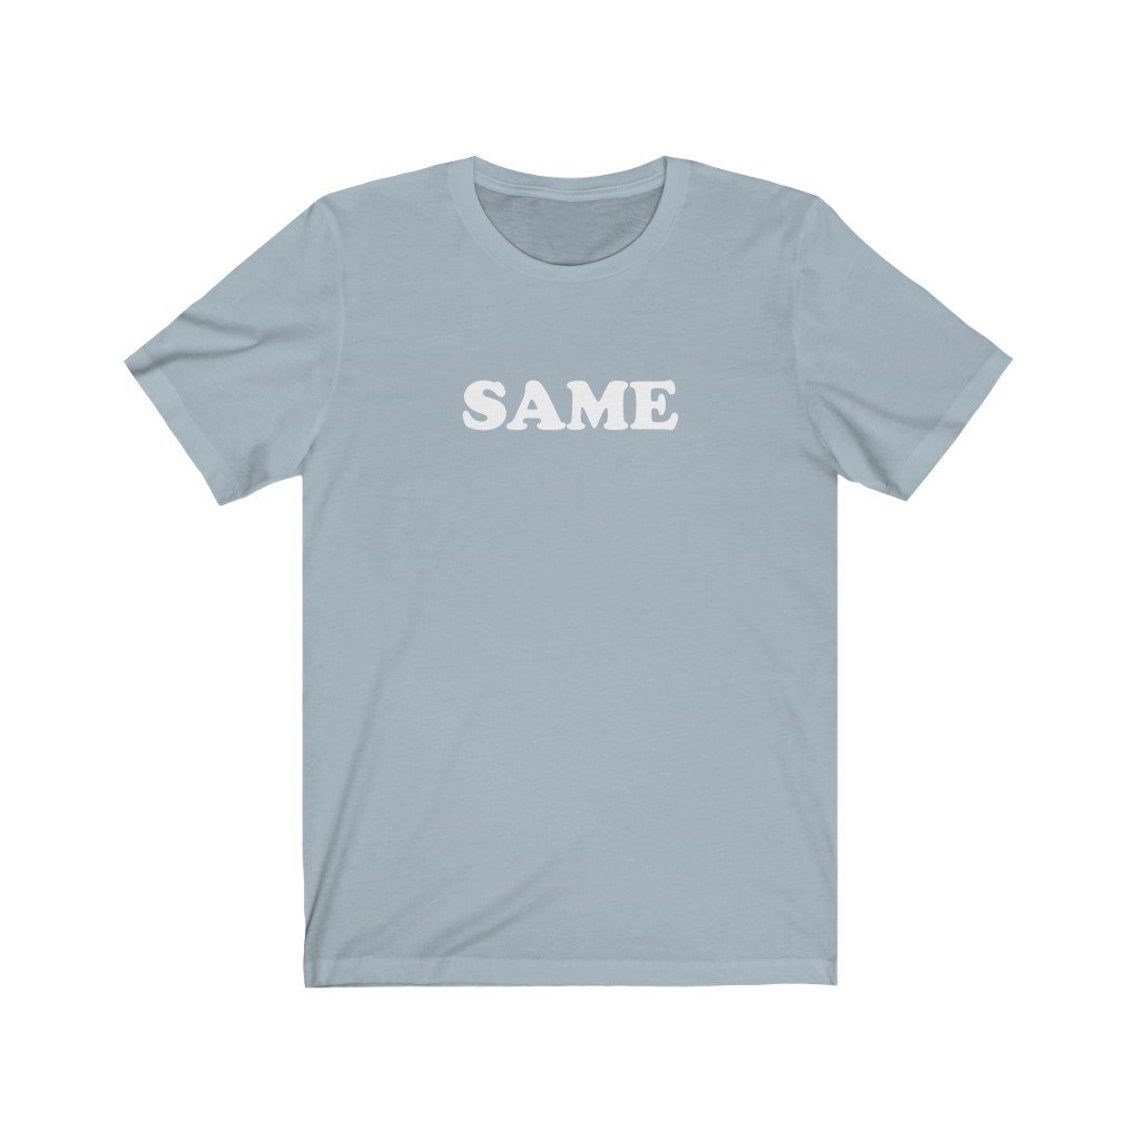 SAME T shirt Funny millennial saying | Etsy